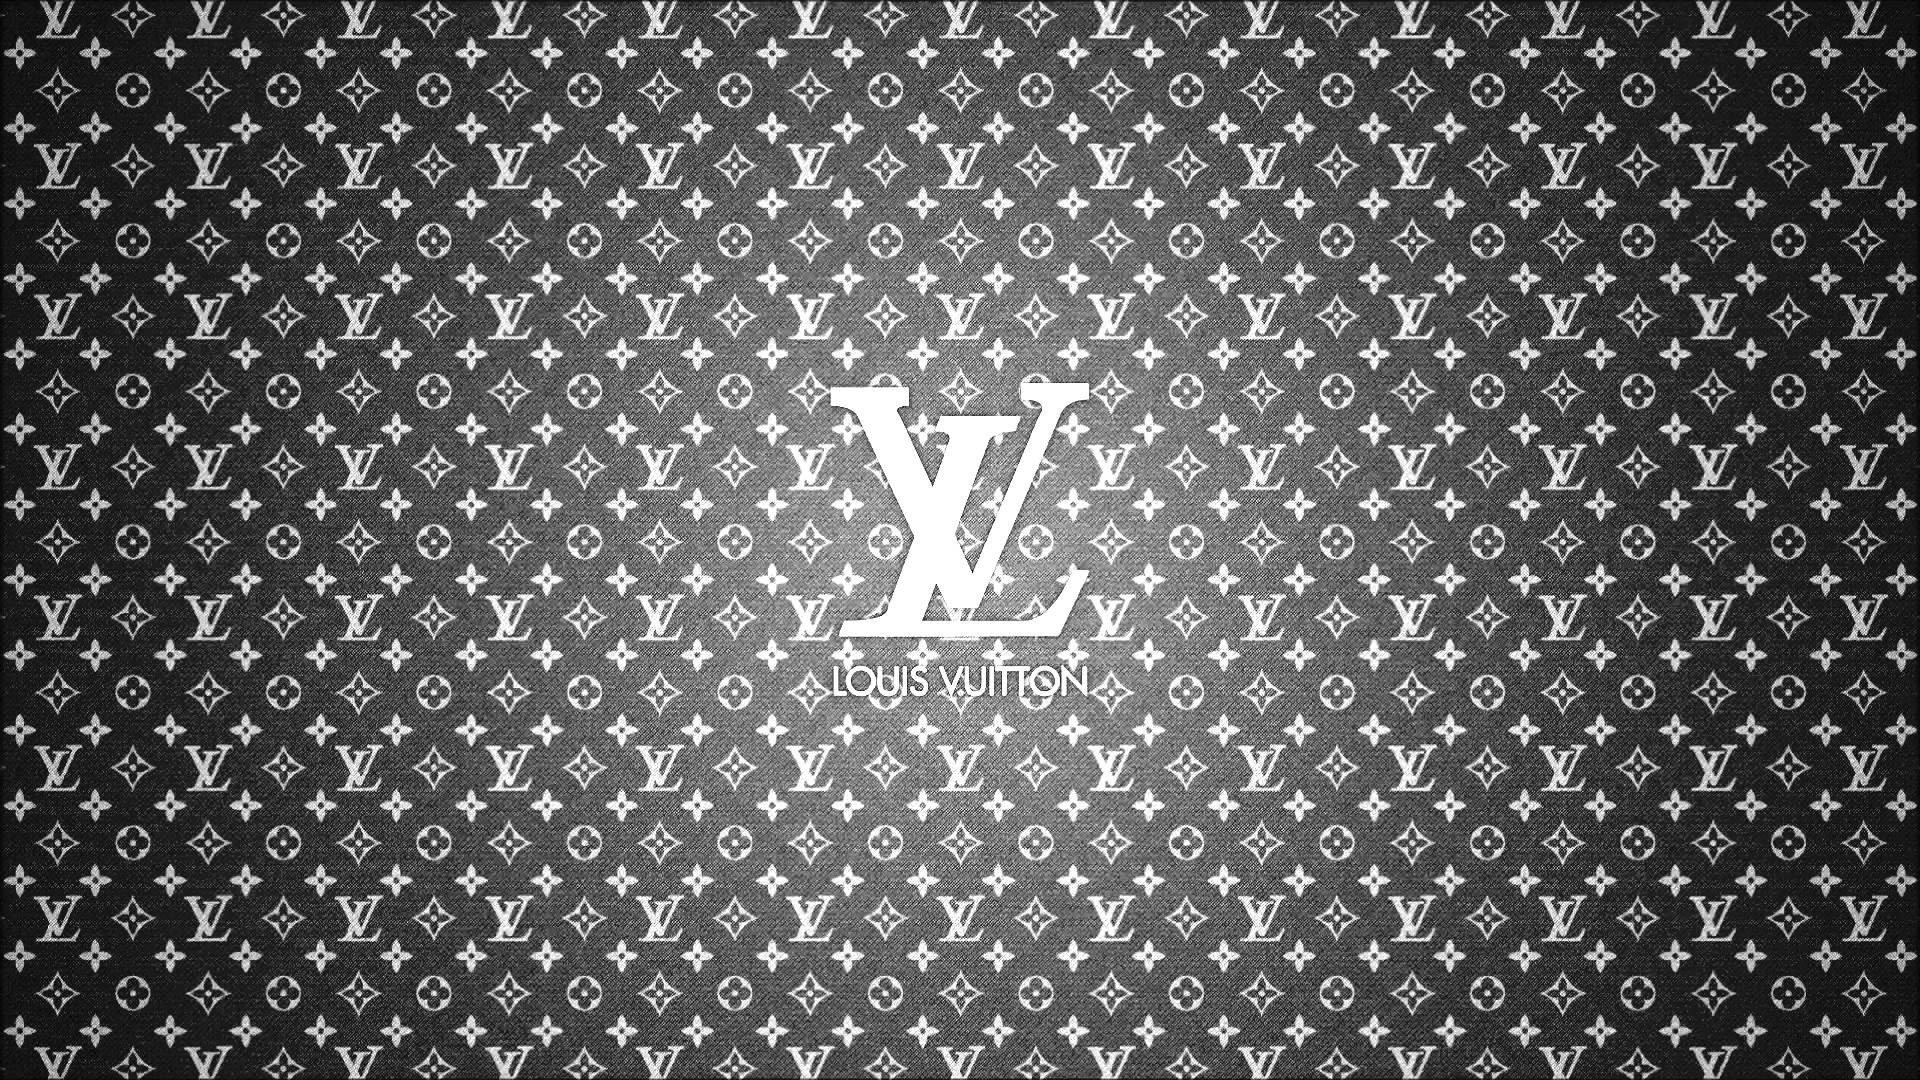 Download The iconic Louis Vuitton logo. Wallpaper